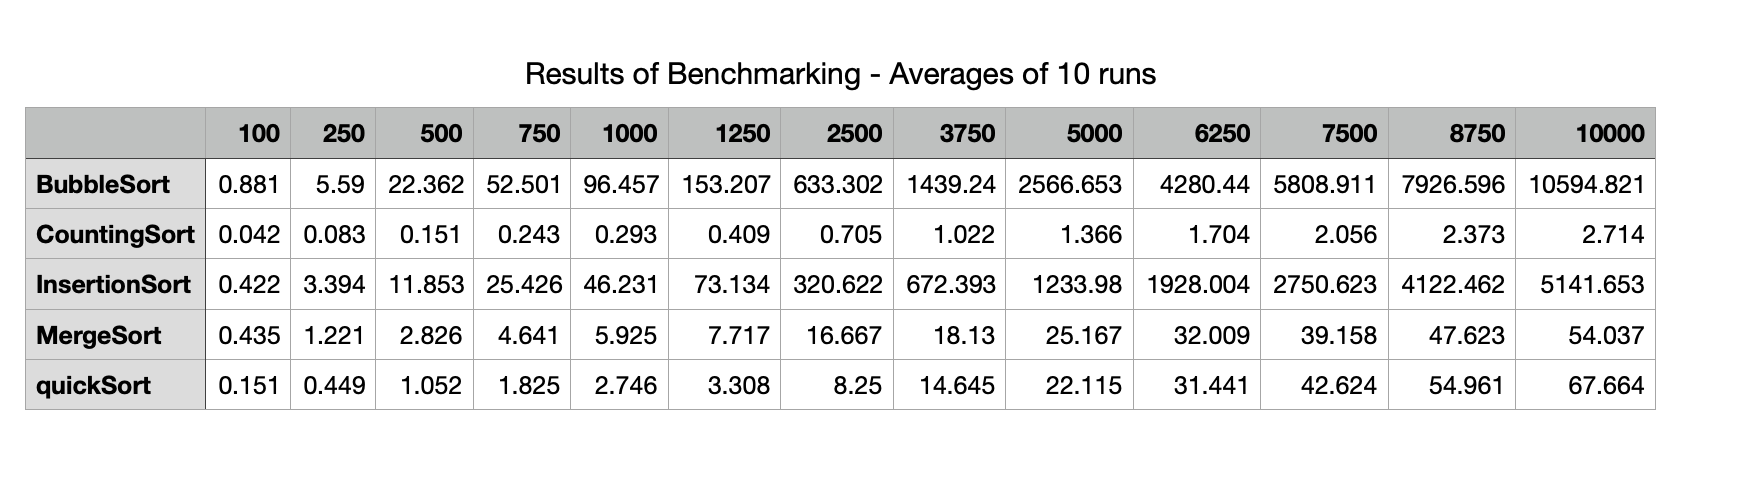 benchmarking_averages